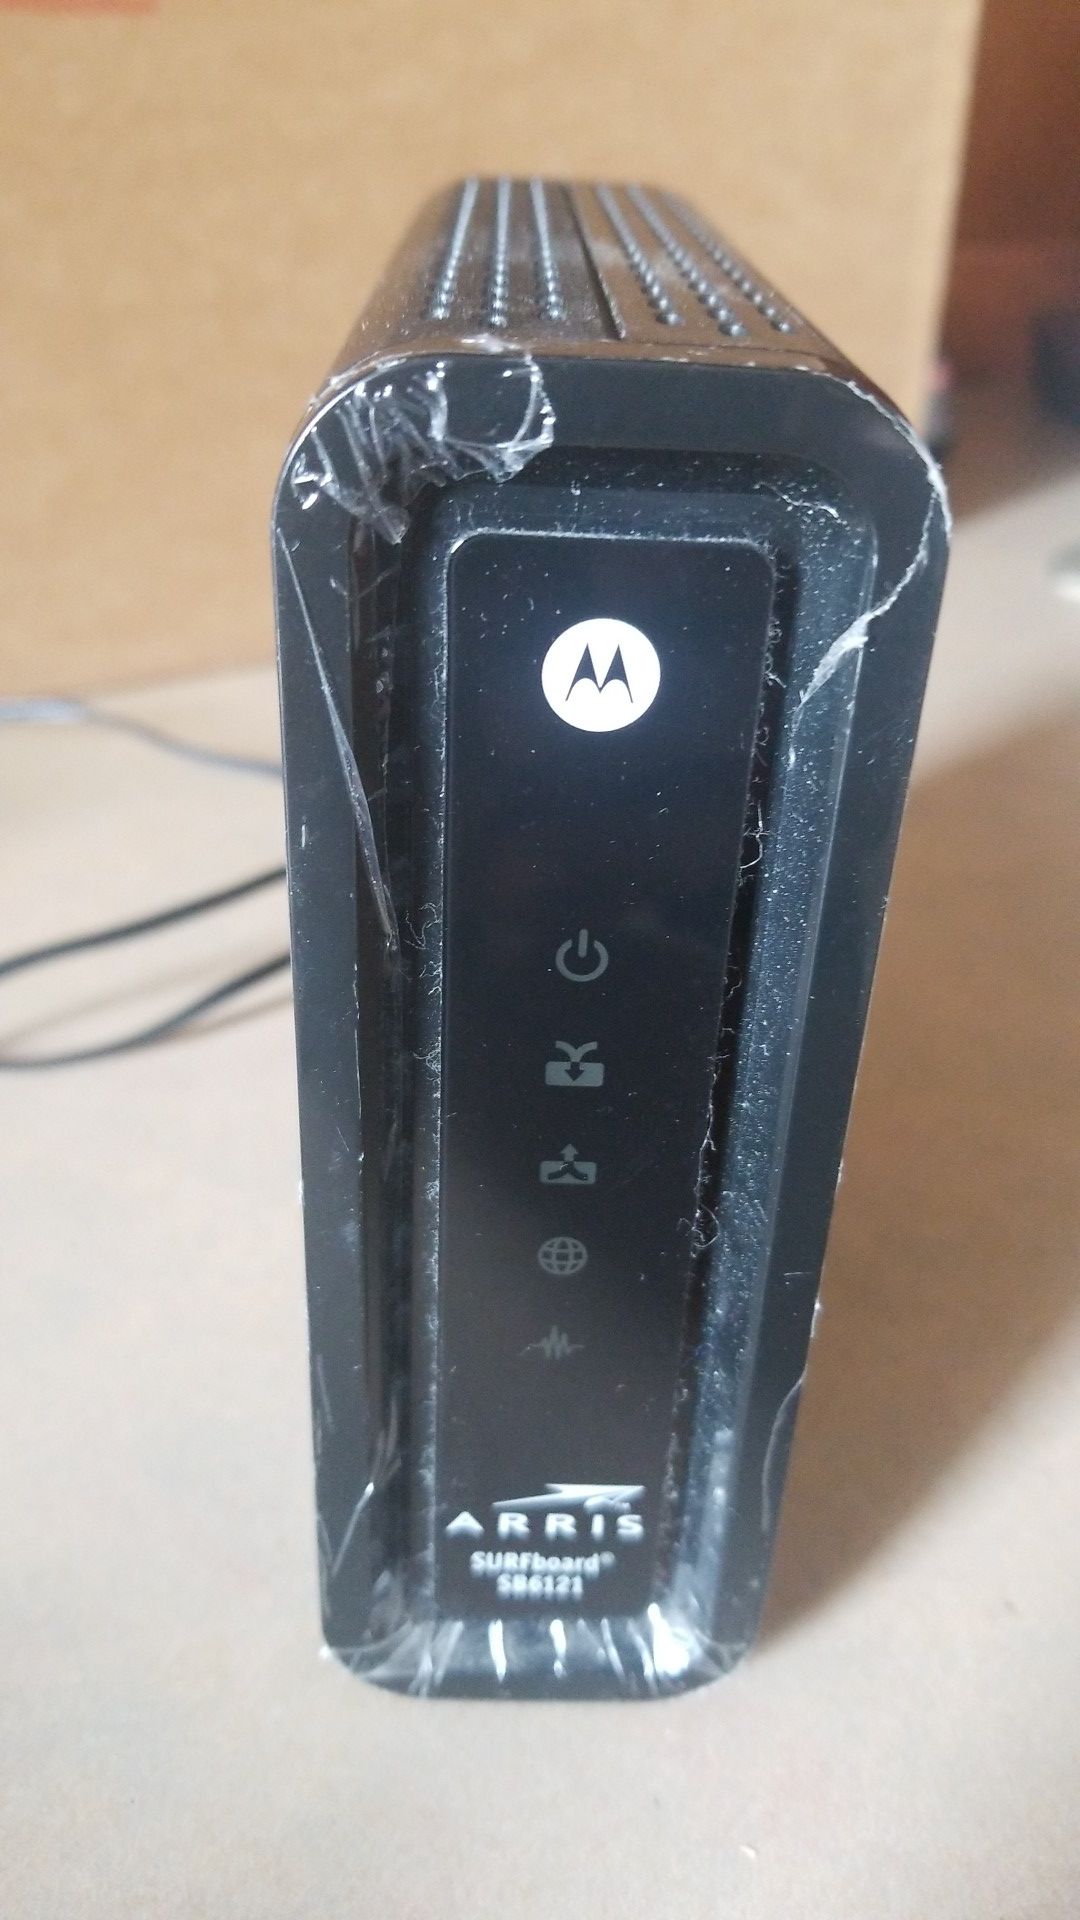 Arris Motorola SB6121 cable modem comcast